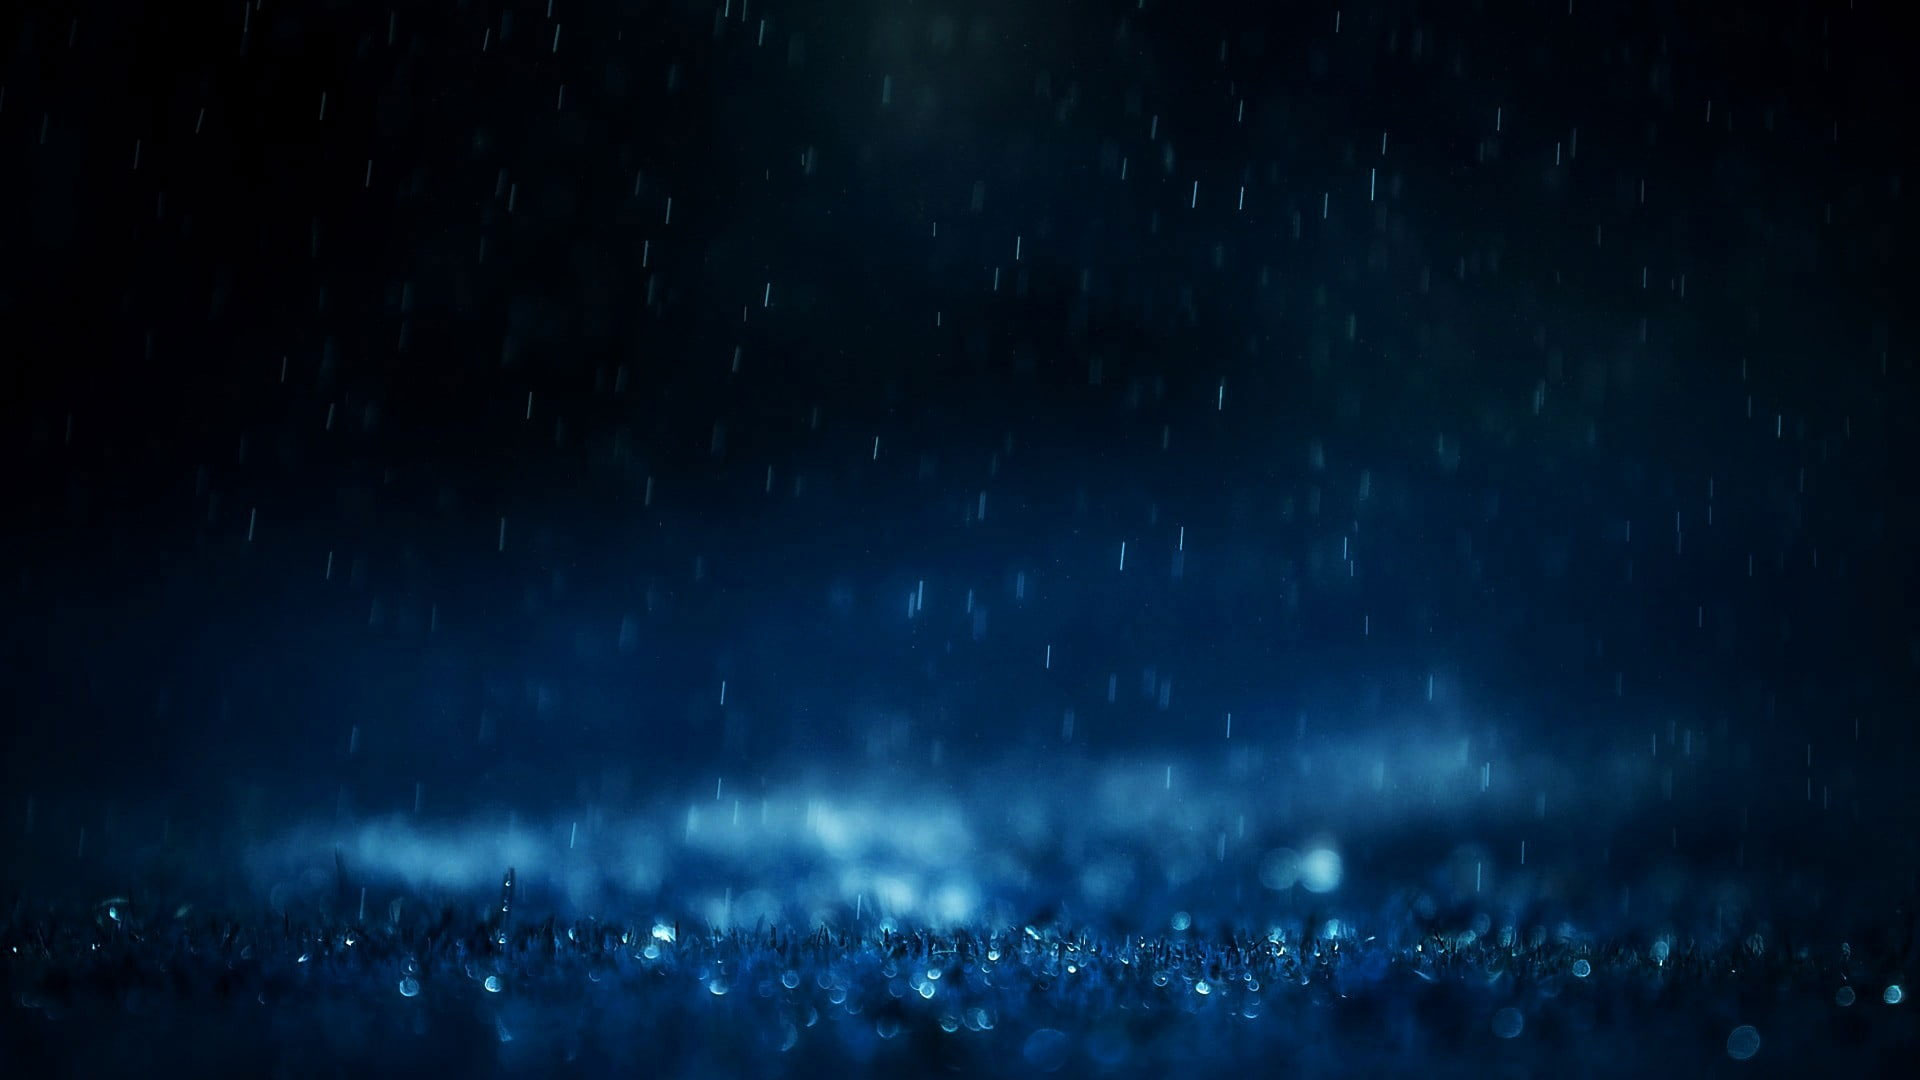 Water droplets wallpaper, untitled, rain, macro, depth of field, night